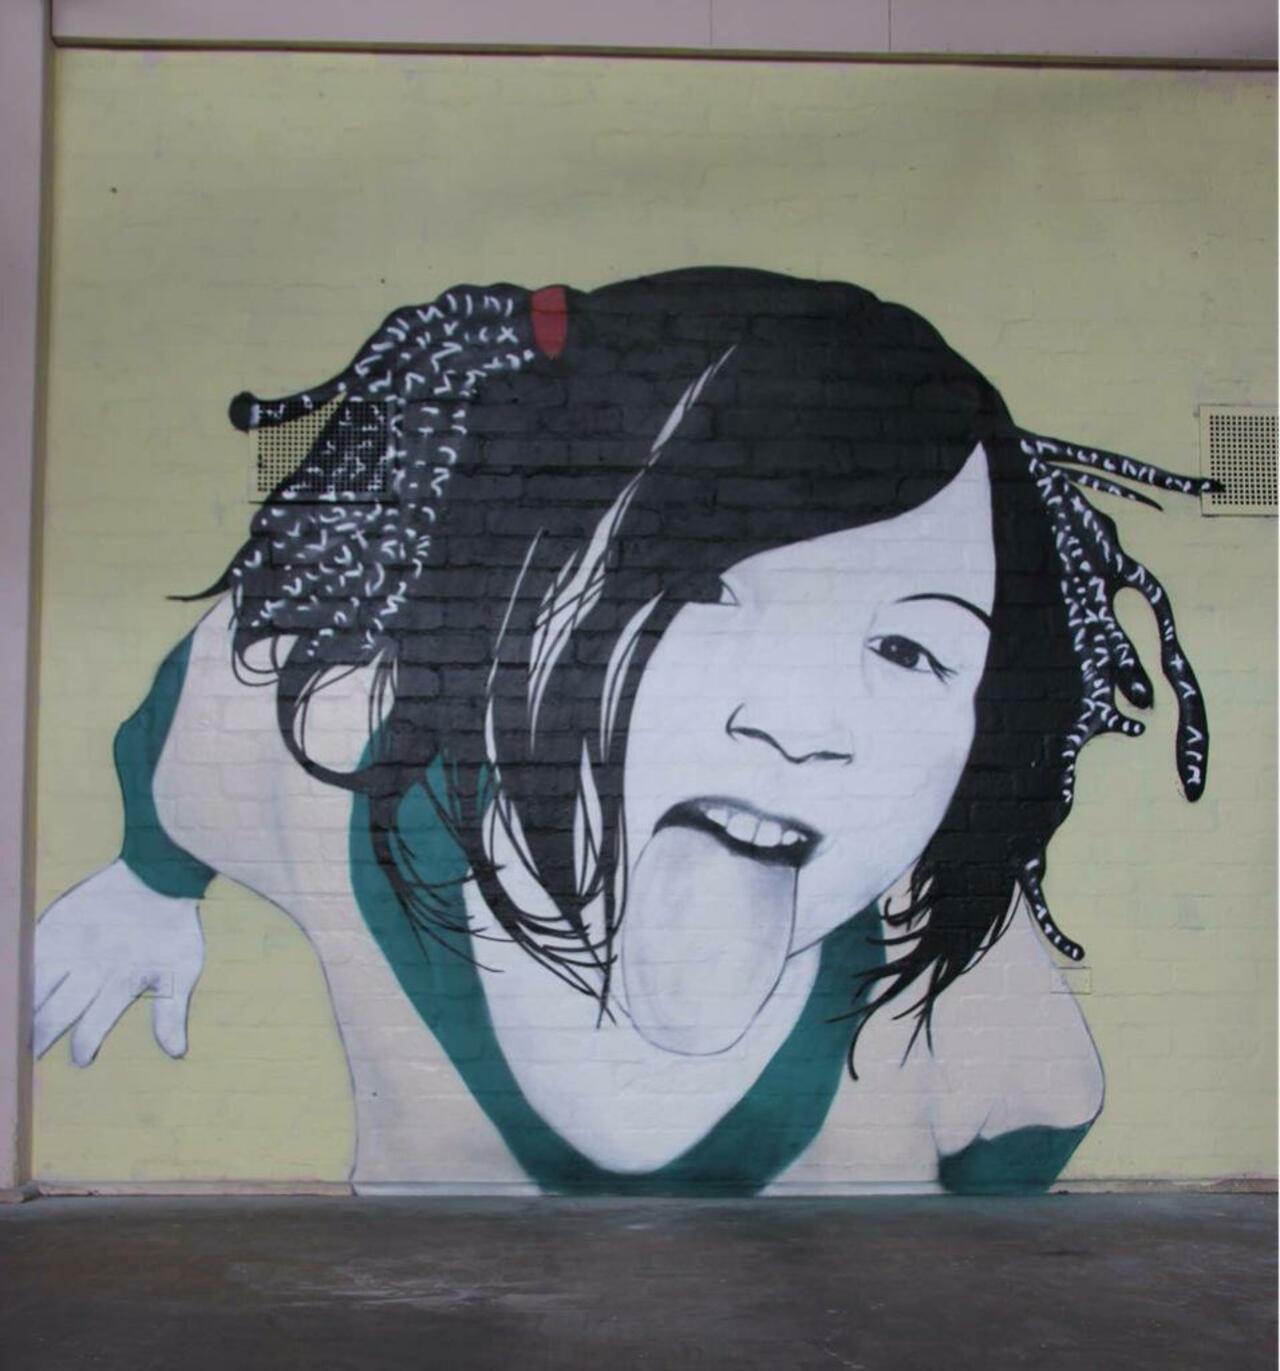 Street Art by the artist 'Be Free'

#art #arte #graffiti #streetart http://t.co/AuuYD3W8aa